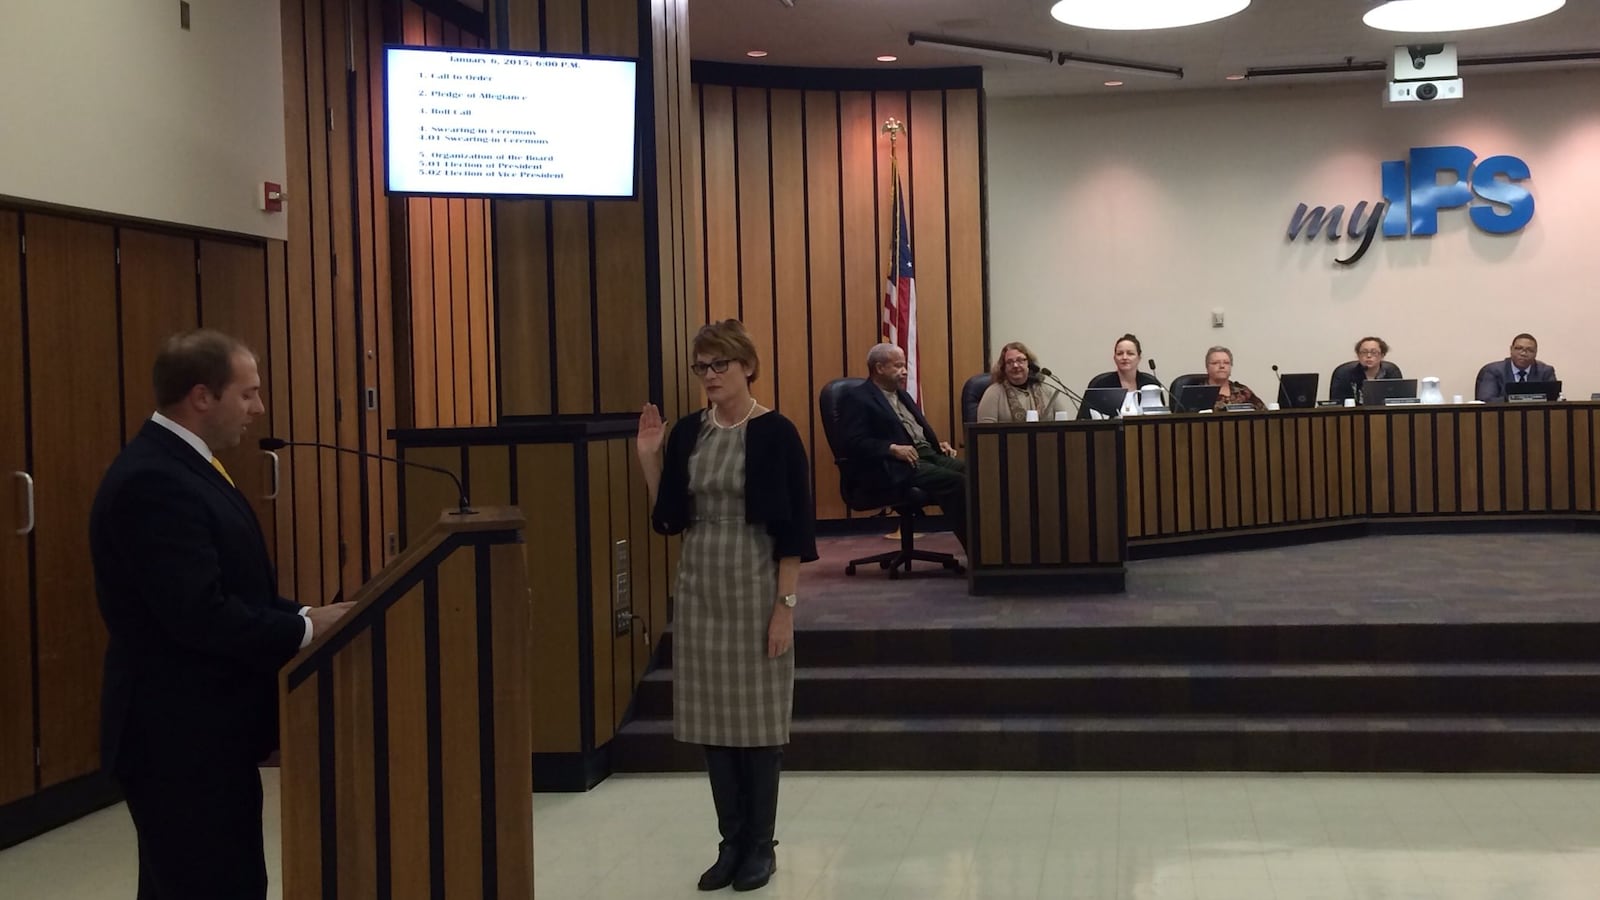 Mary Ann Sullivan is sworn in as an Indianapolis Public School Board member.